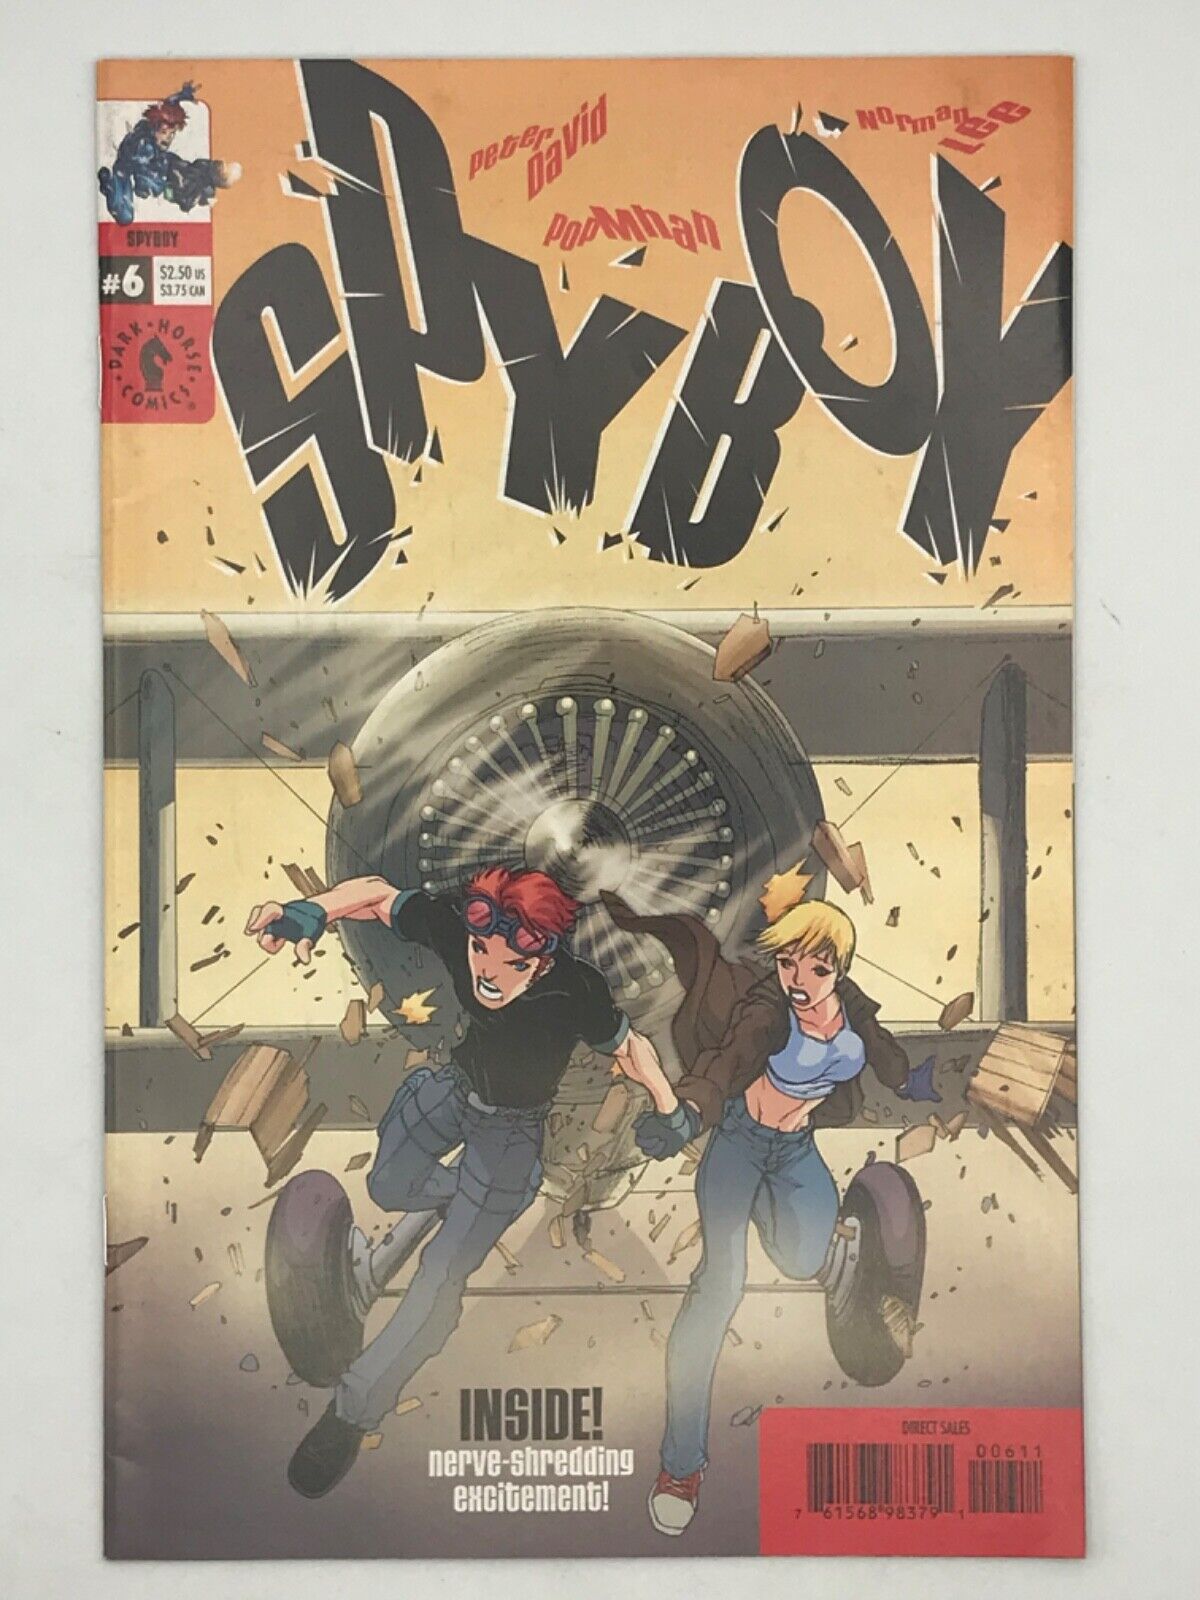 Dark Horse Comics: Spy Boy #6 - 2000 - Peter David, Pop Mhan, Norman Lee